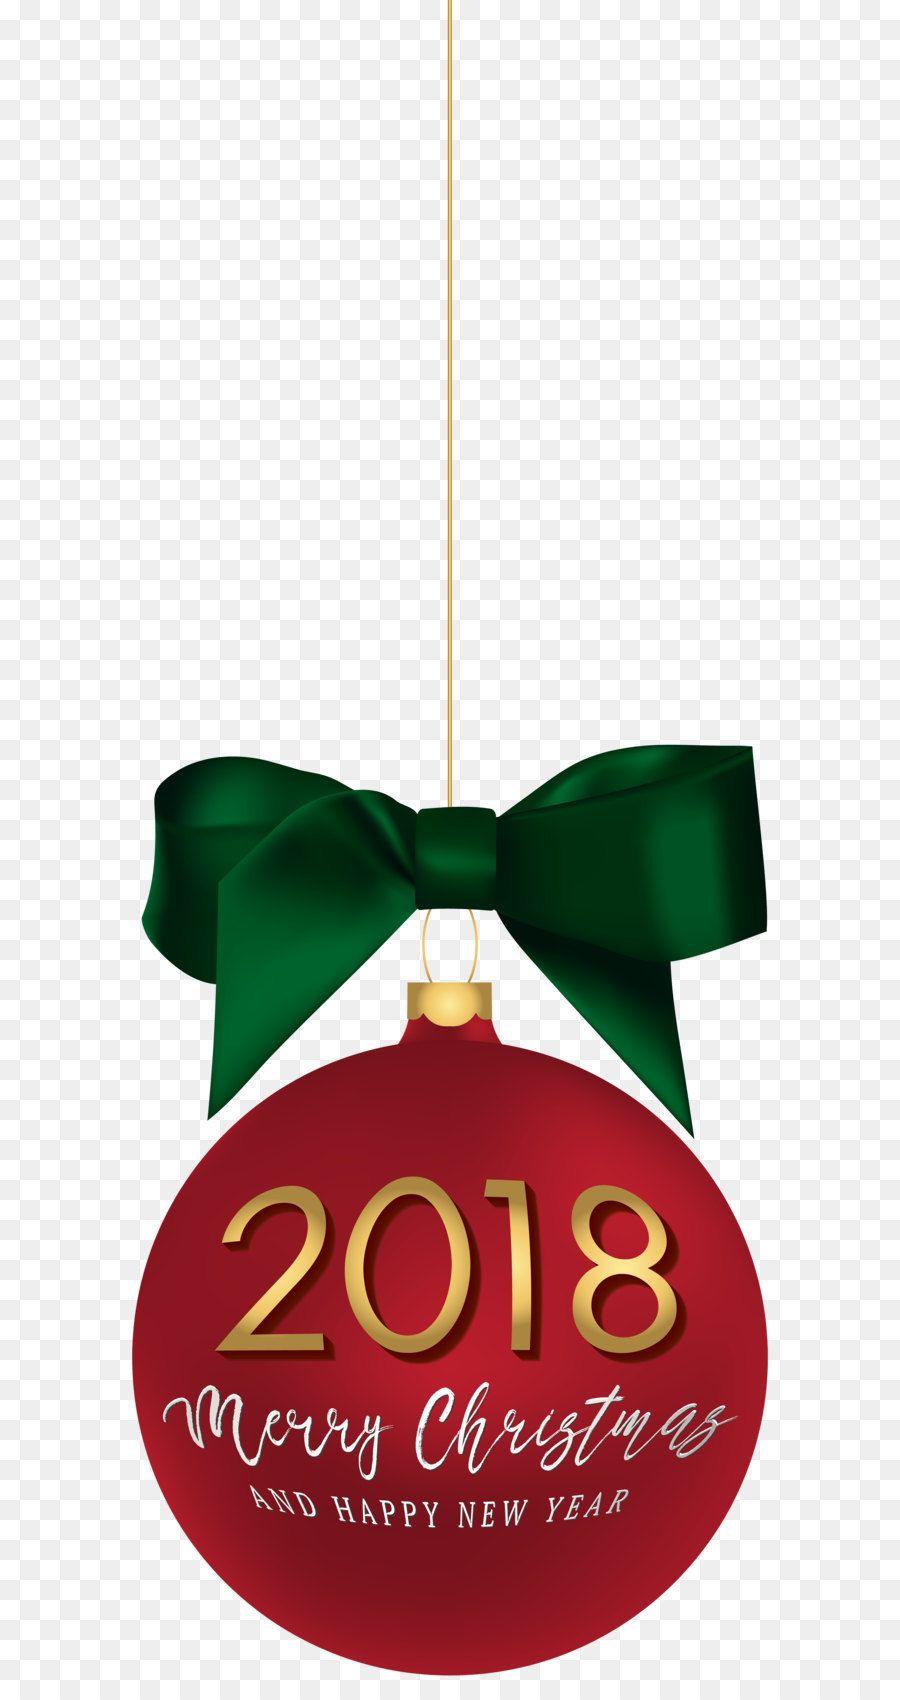 Christmas 2018 Logo - New Year Christmas Clip art Happy New Year Ball PNG Clip Art